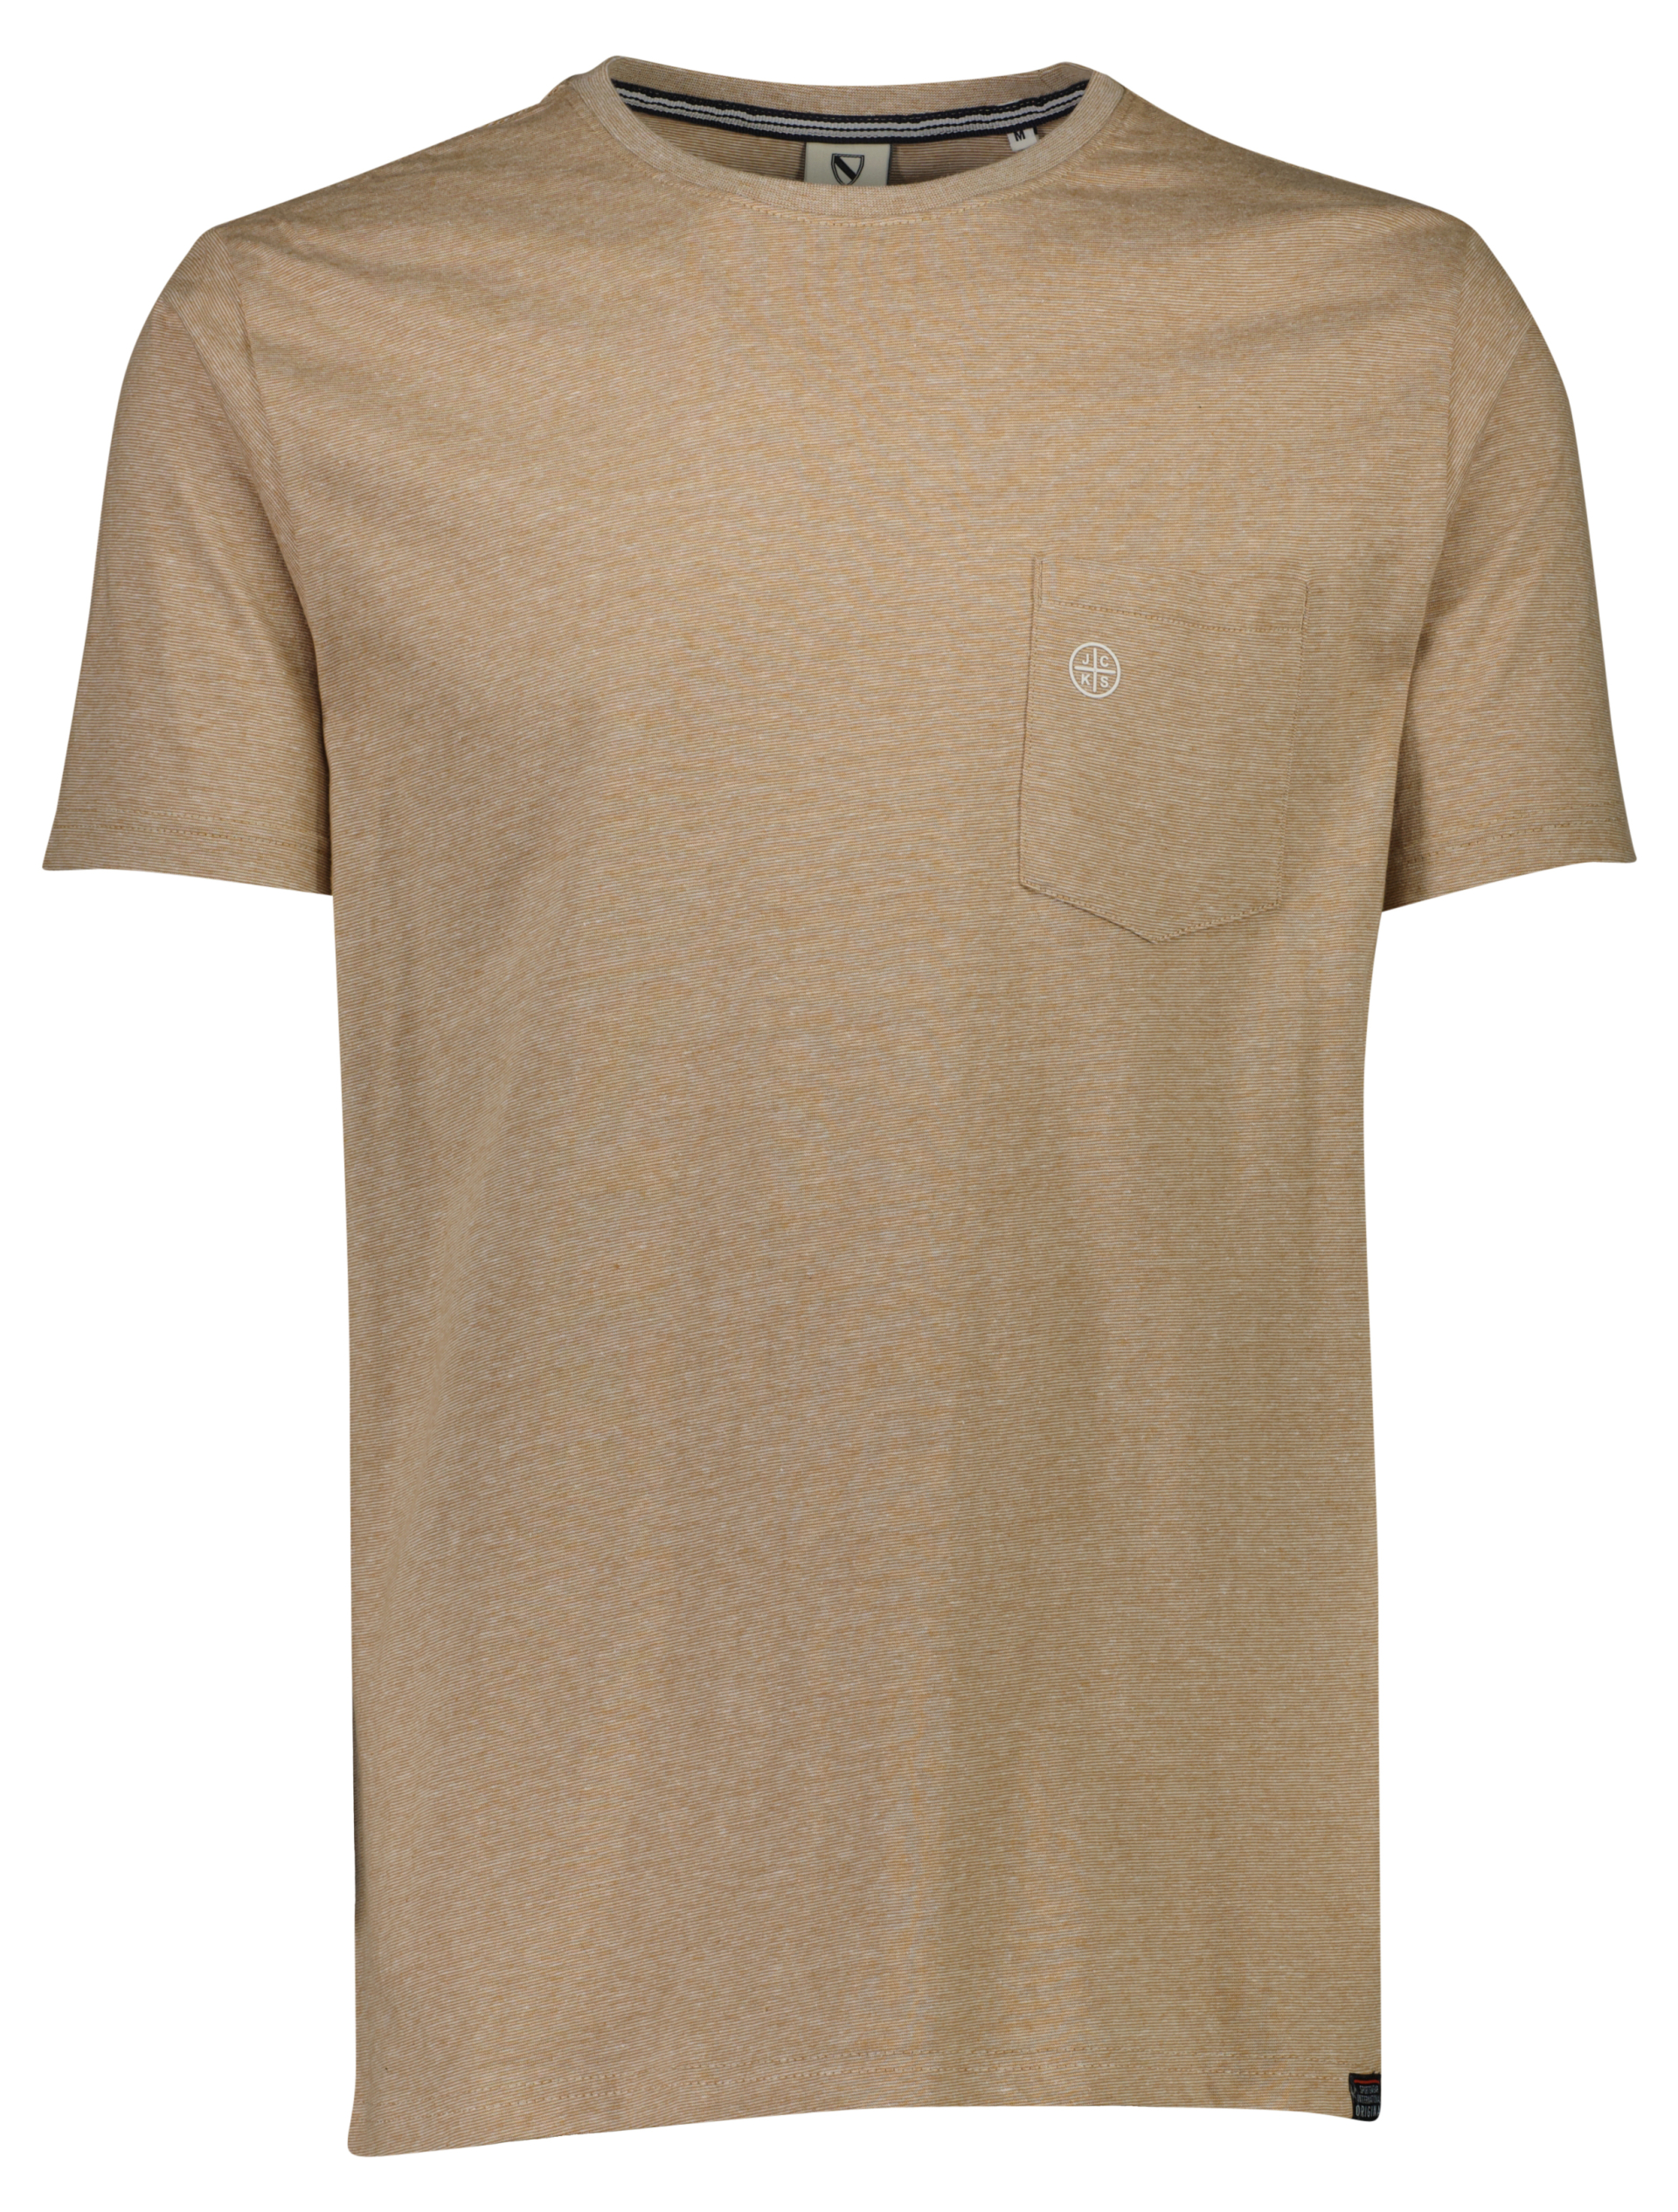 Jack's T-shirt brun / camel